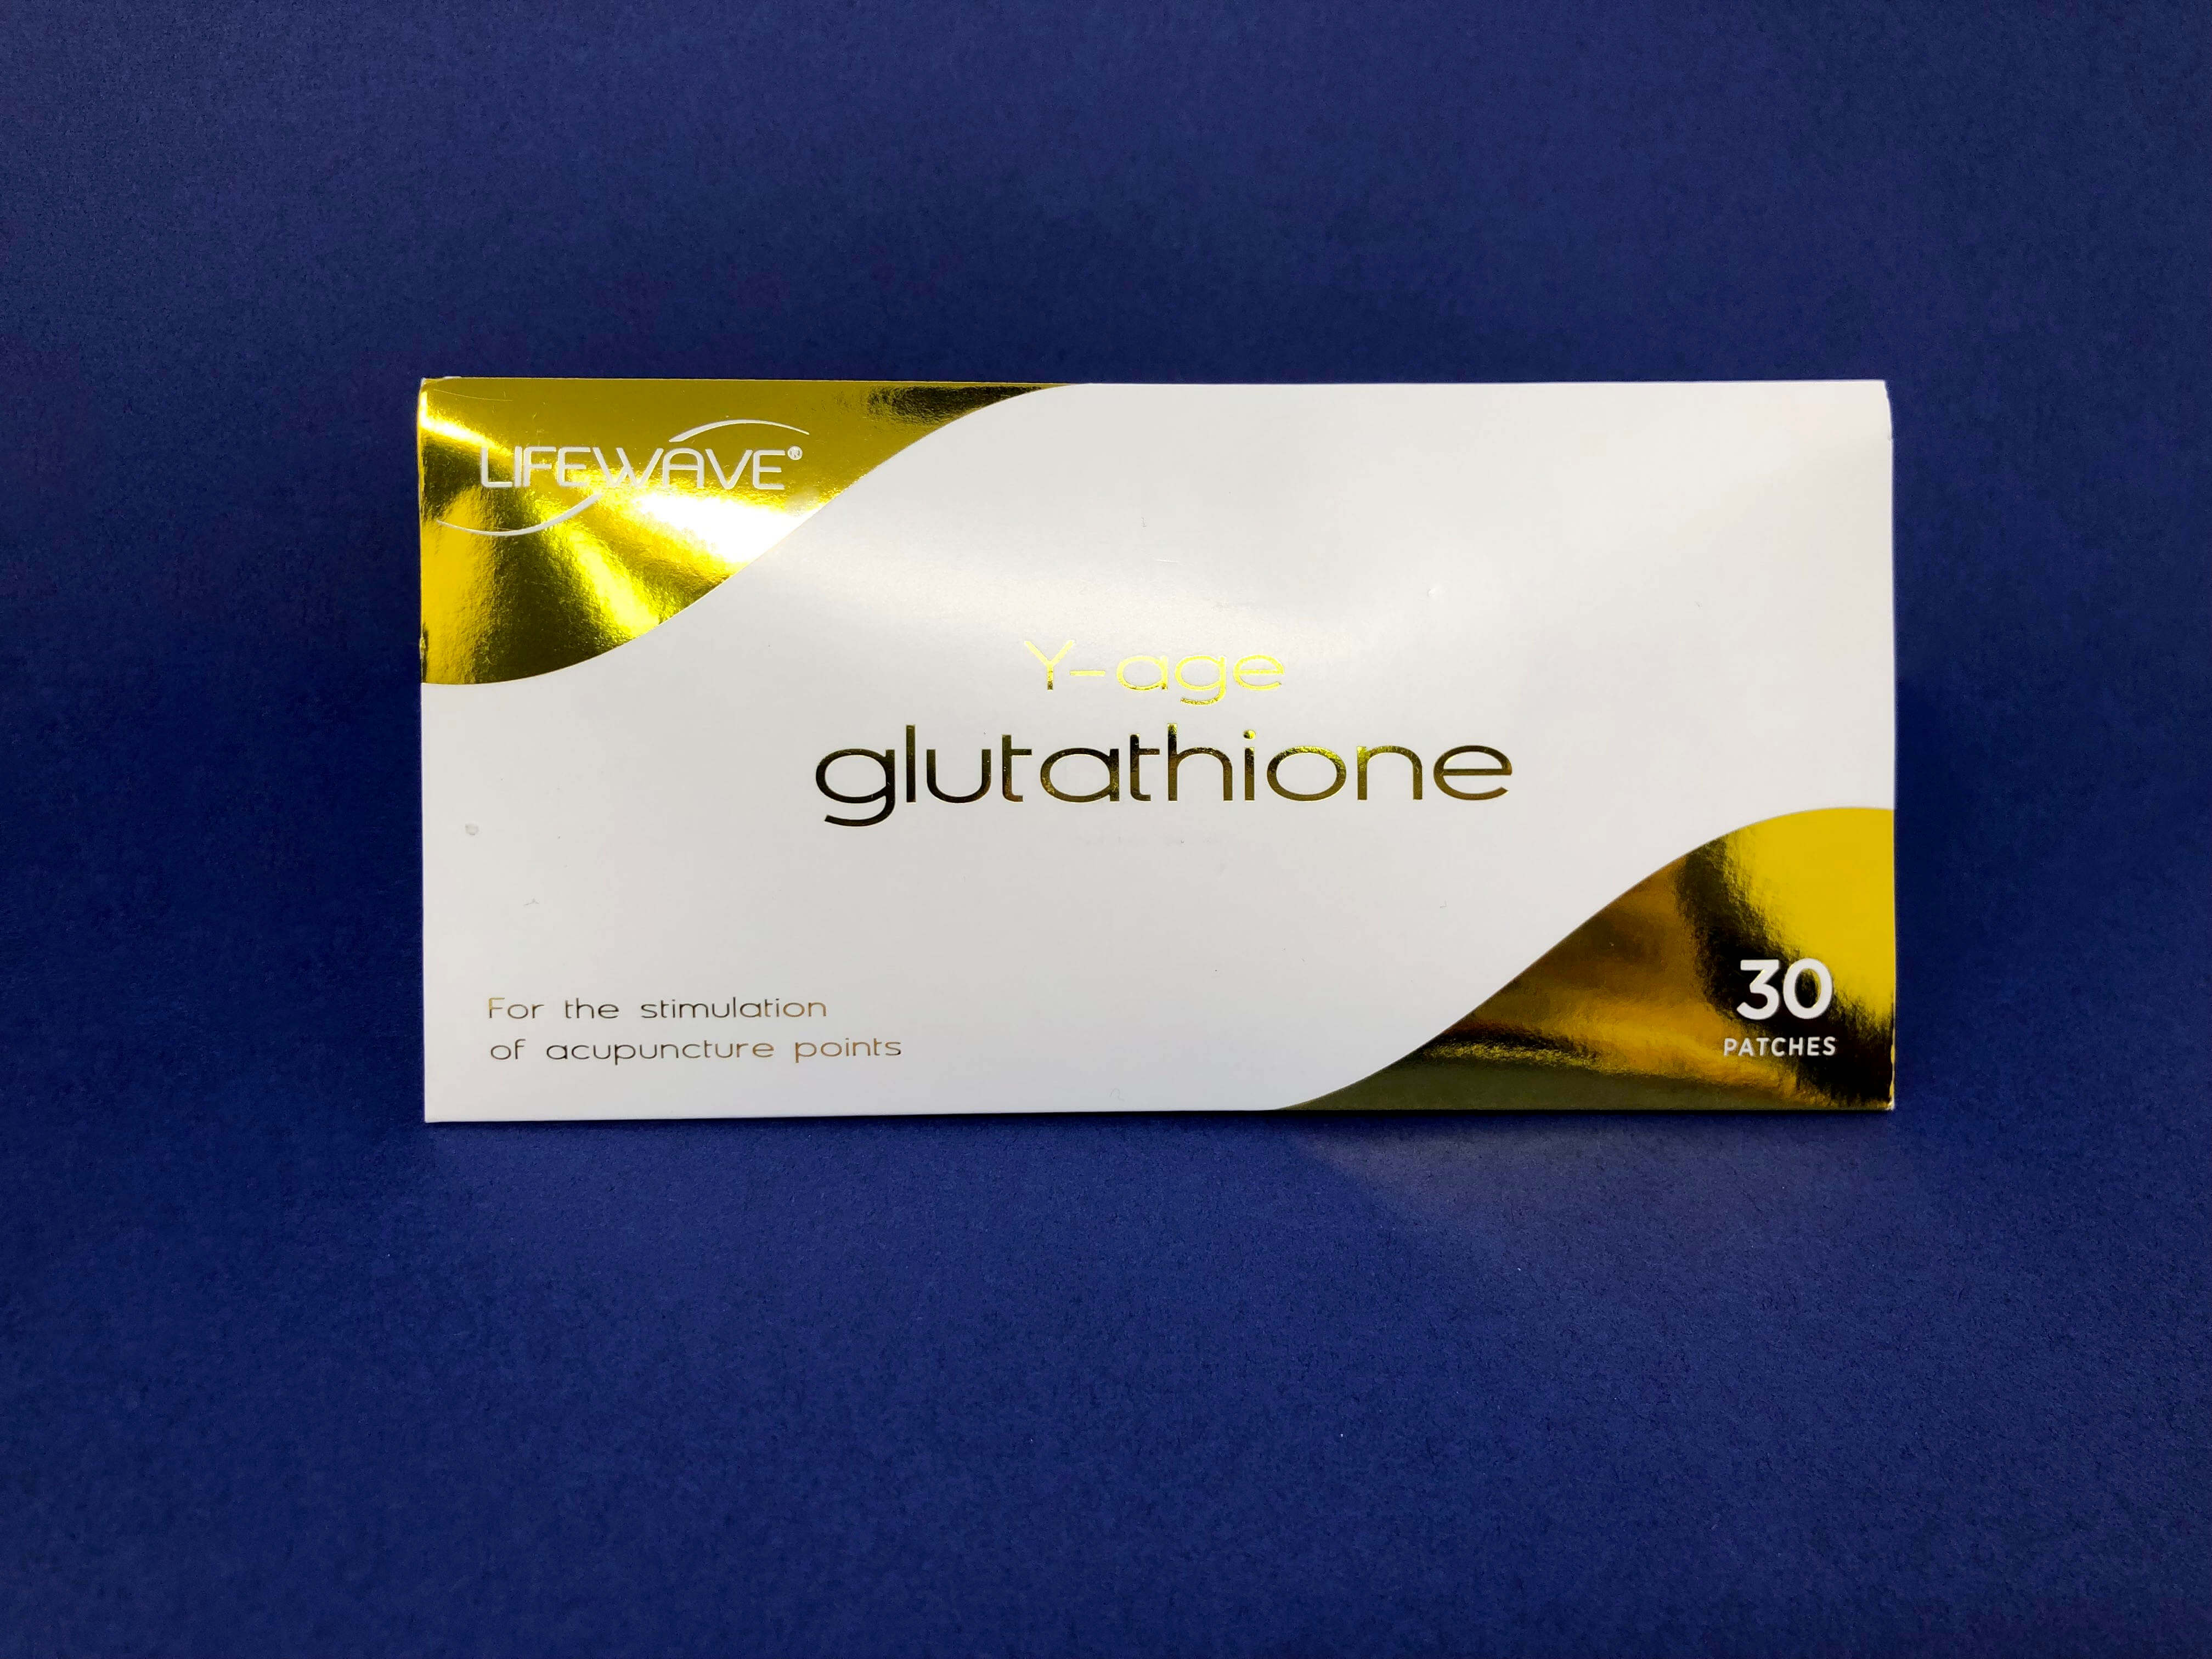 LIFEWAVE ライフウェーブ Y-age glutathione グルタチオン